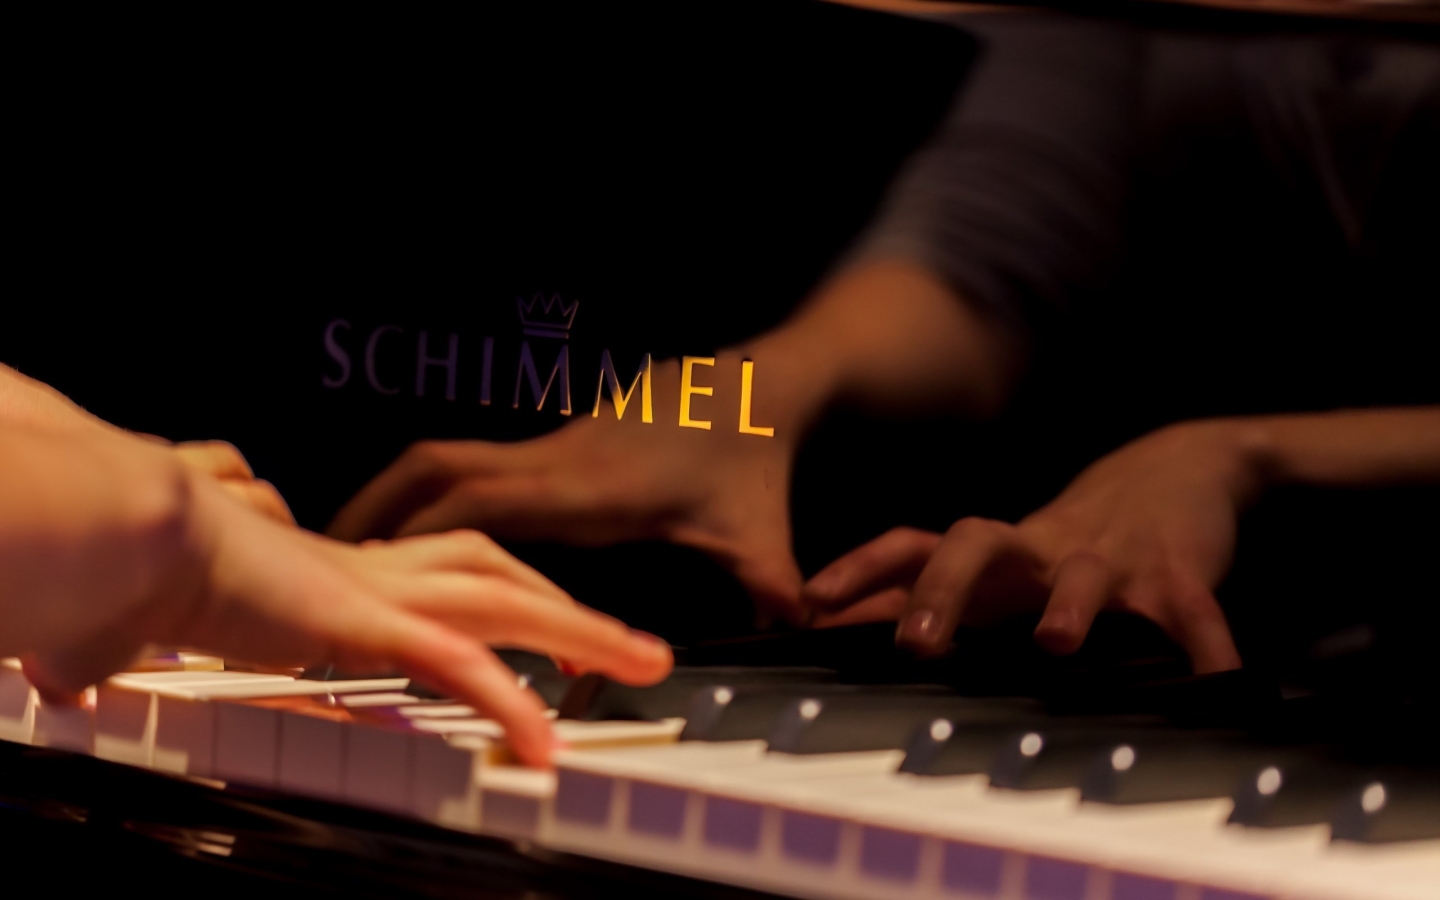 Schimmel Piano for 1440 x 900 widescreen resolution